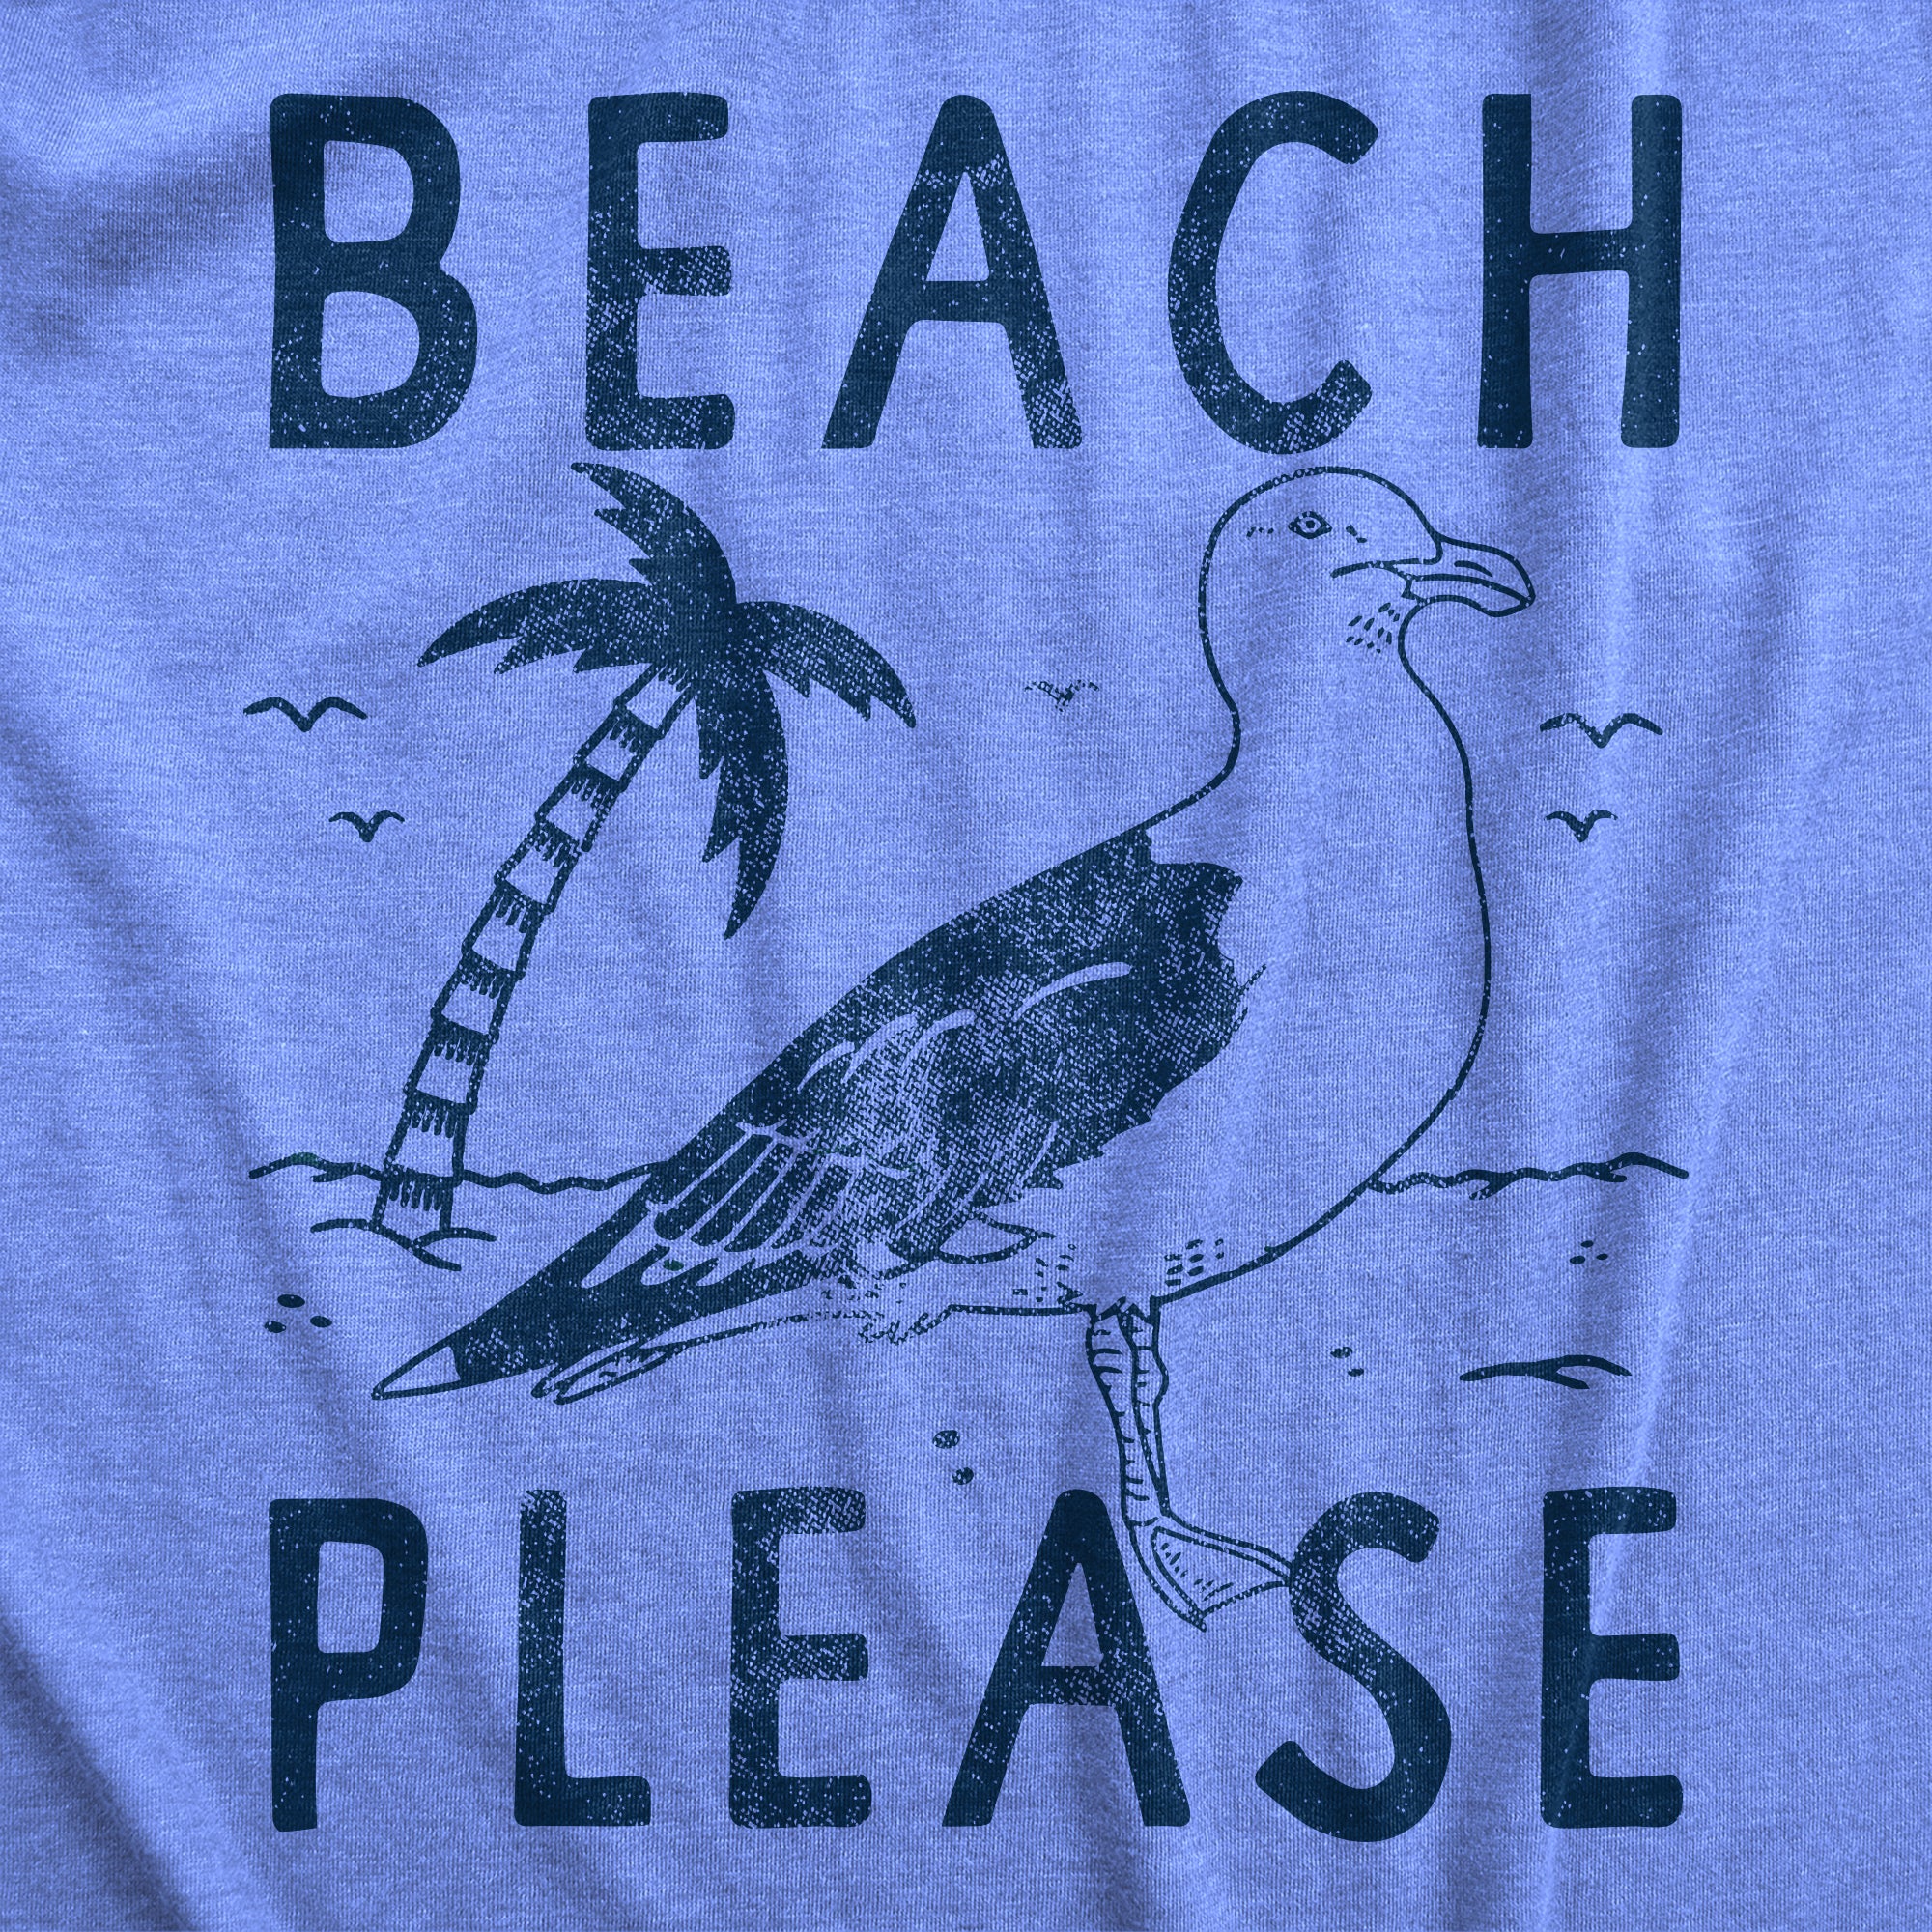 Funny Light Heather Blue - BEACH Beach Please Mens T Shirt Nerdy Vacation Tee